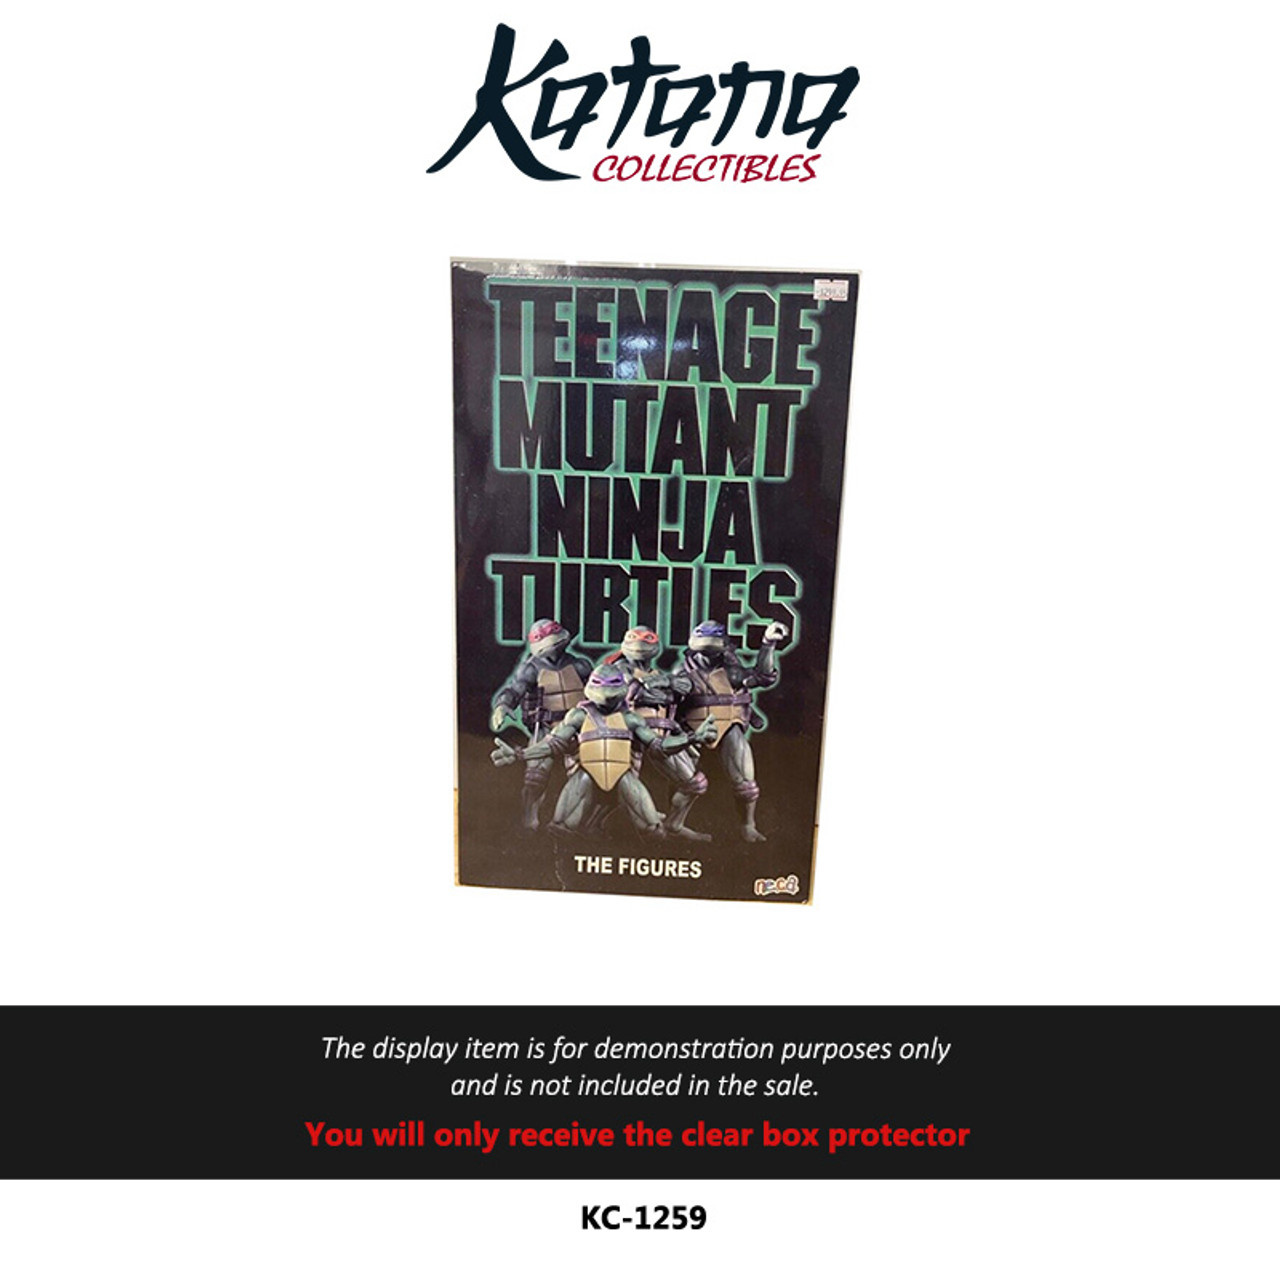 Katana Collectibles Protector For NECA Teenage Mutant Ninja Turtles 2018 SDCC 4-Pack Figures